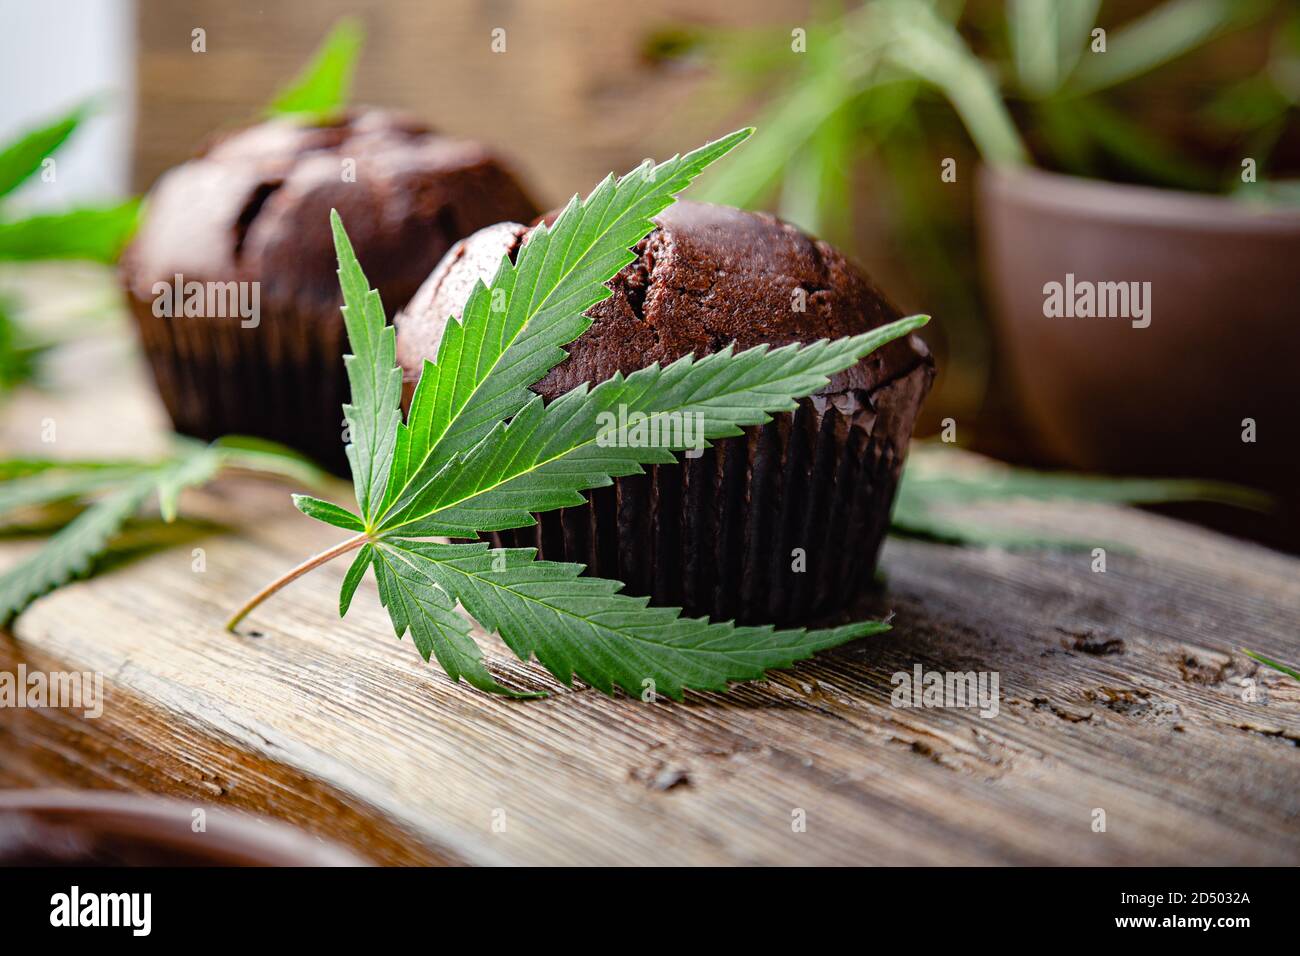 Cupcake with marijuana. Chocolate cupcake muffins with cannabis weed cbd. Medical marijuana drugs in food dessert, ganja legalization. Cooking baking Stock Photo